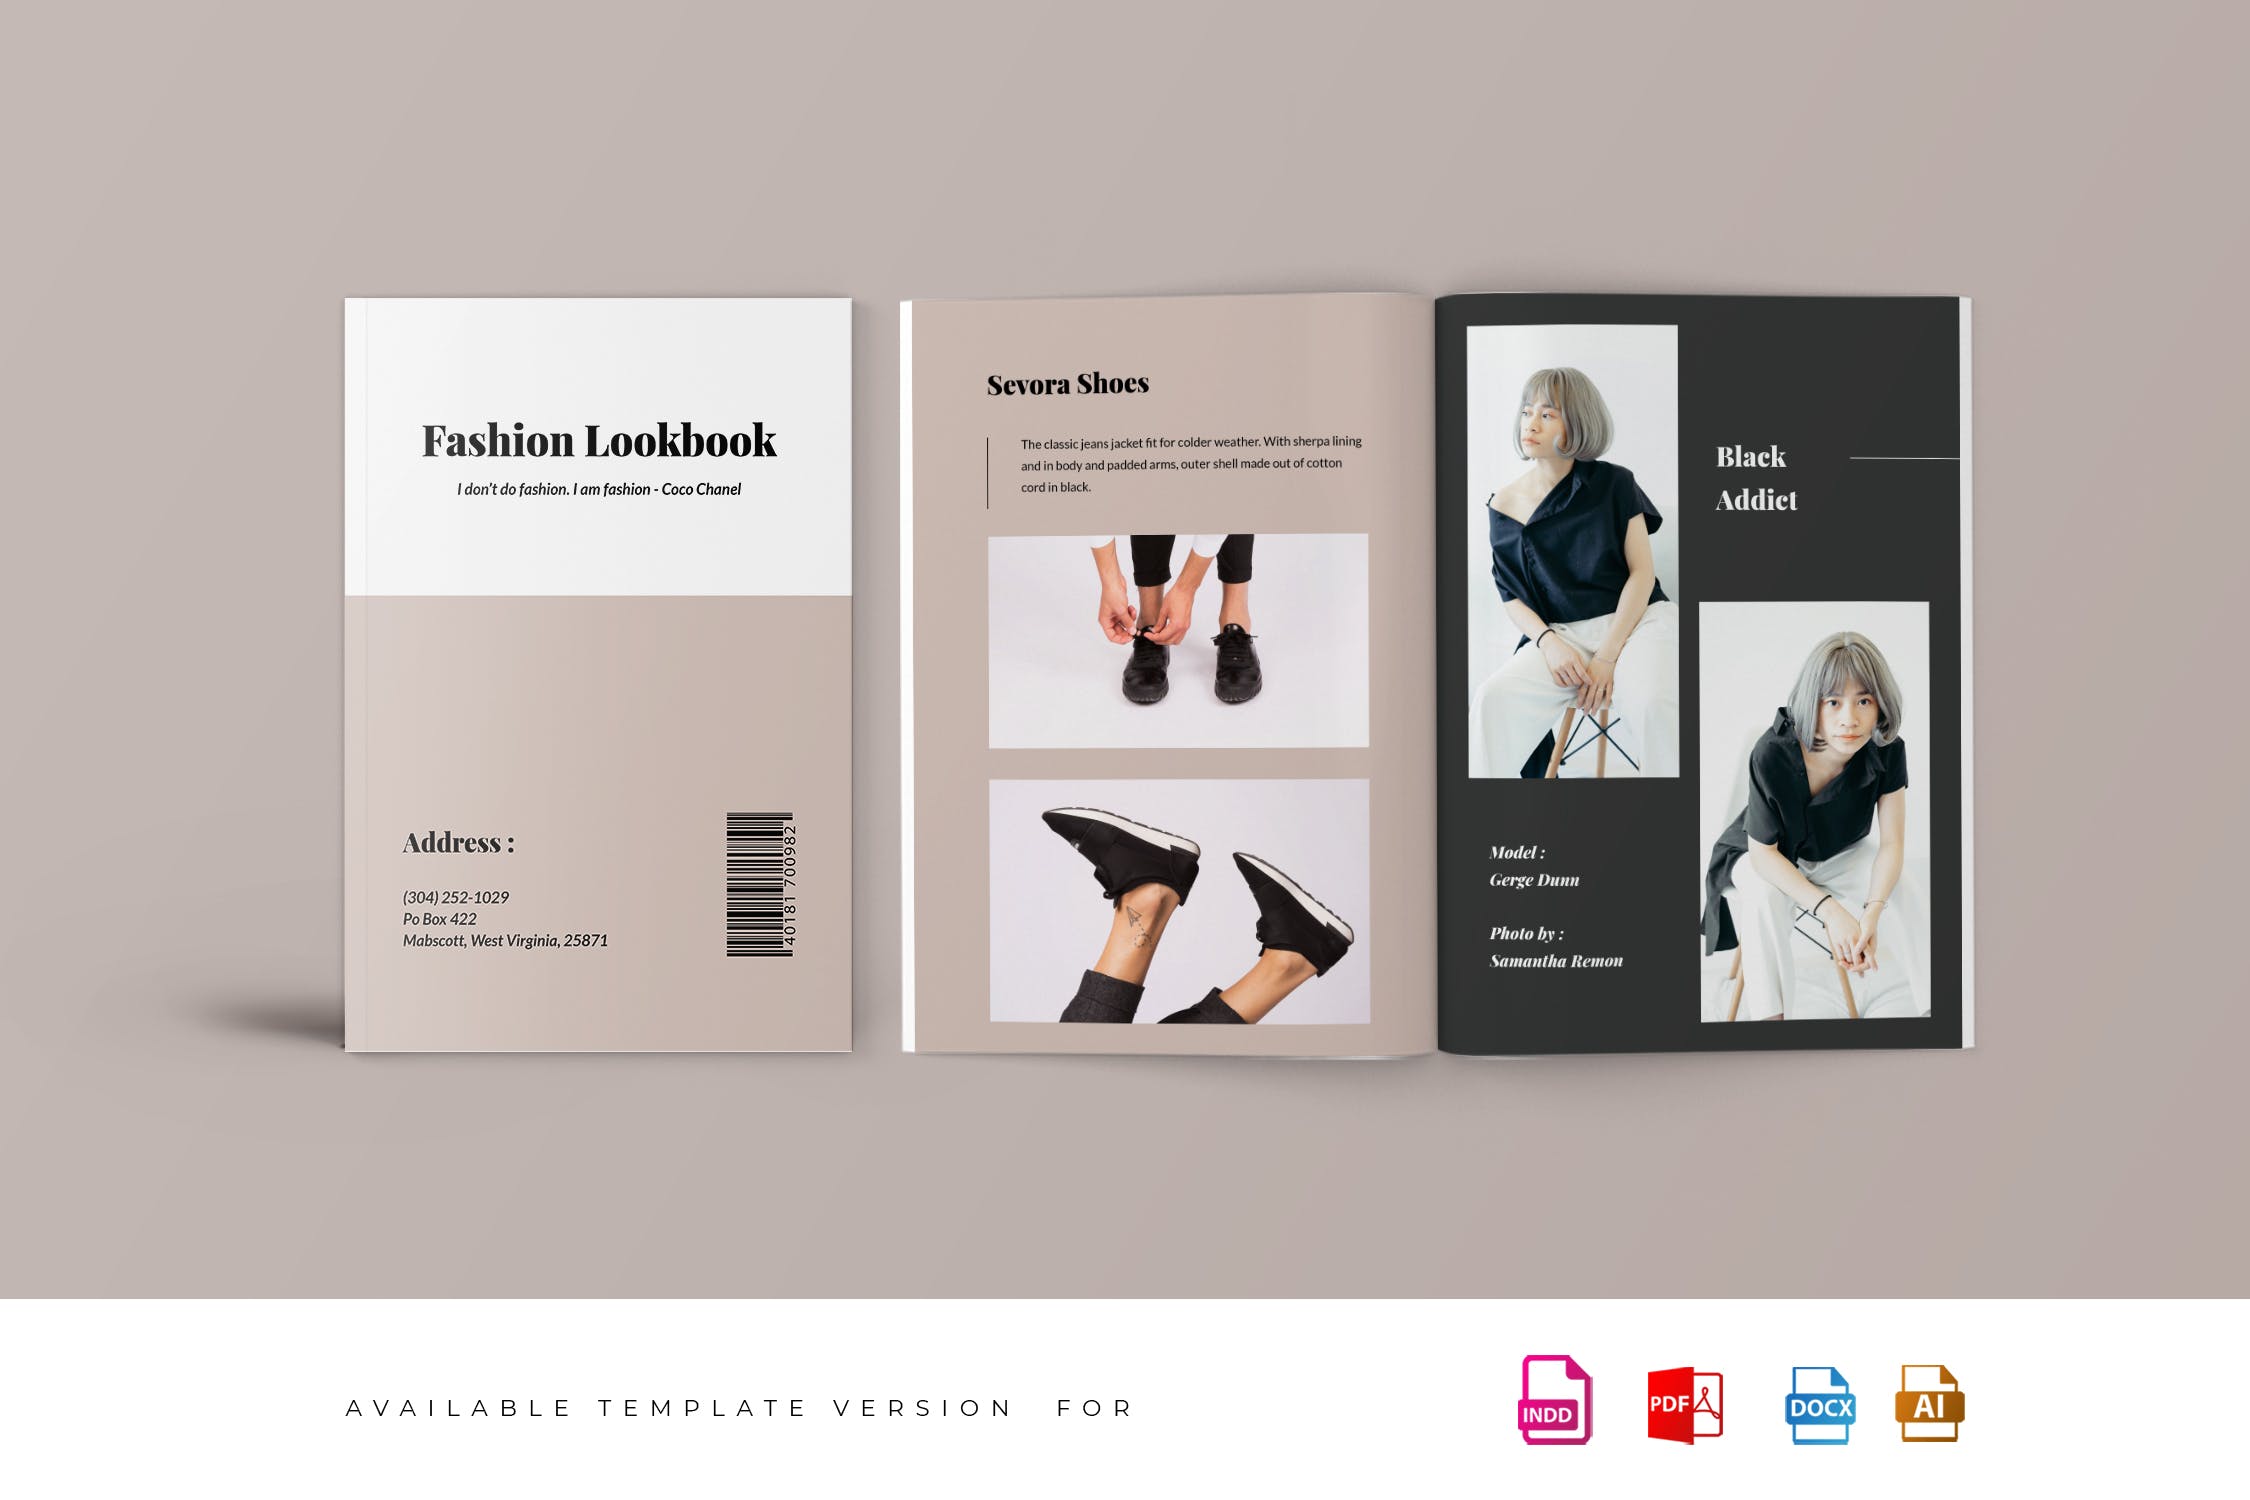 时尚品牌服饰产品手册/产品画册设计模板 Fashion Lookbook Catalogue插图